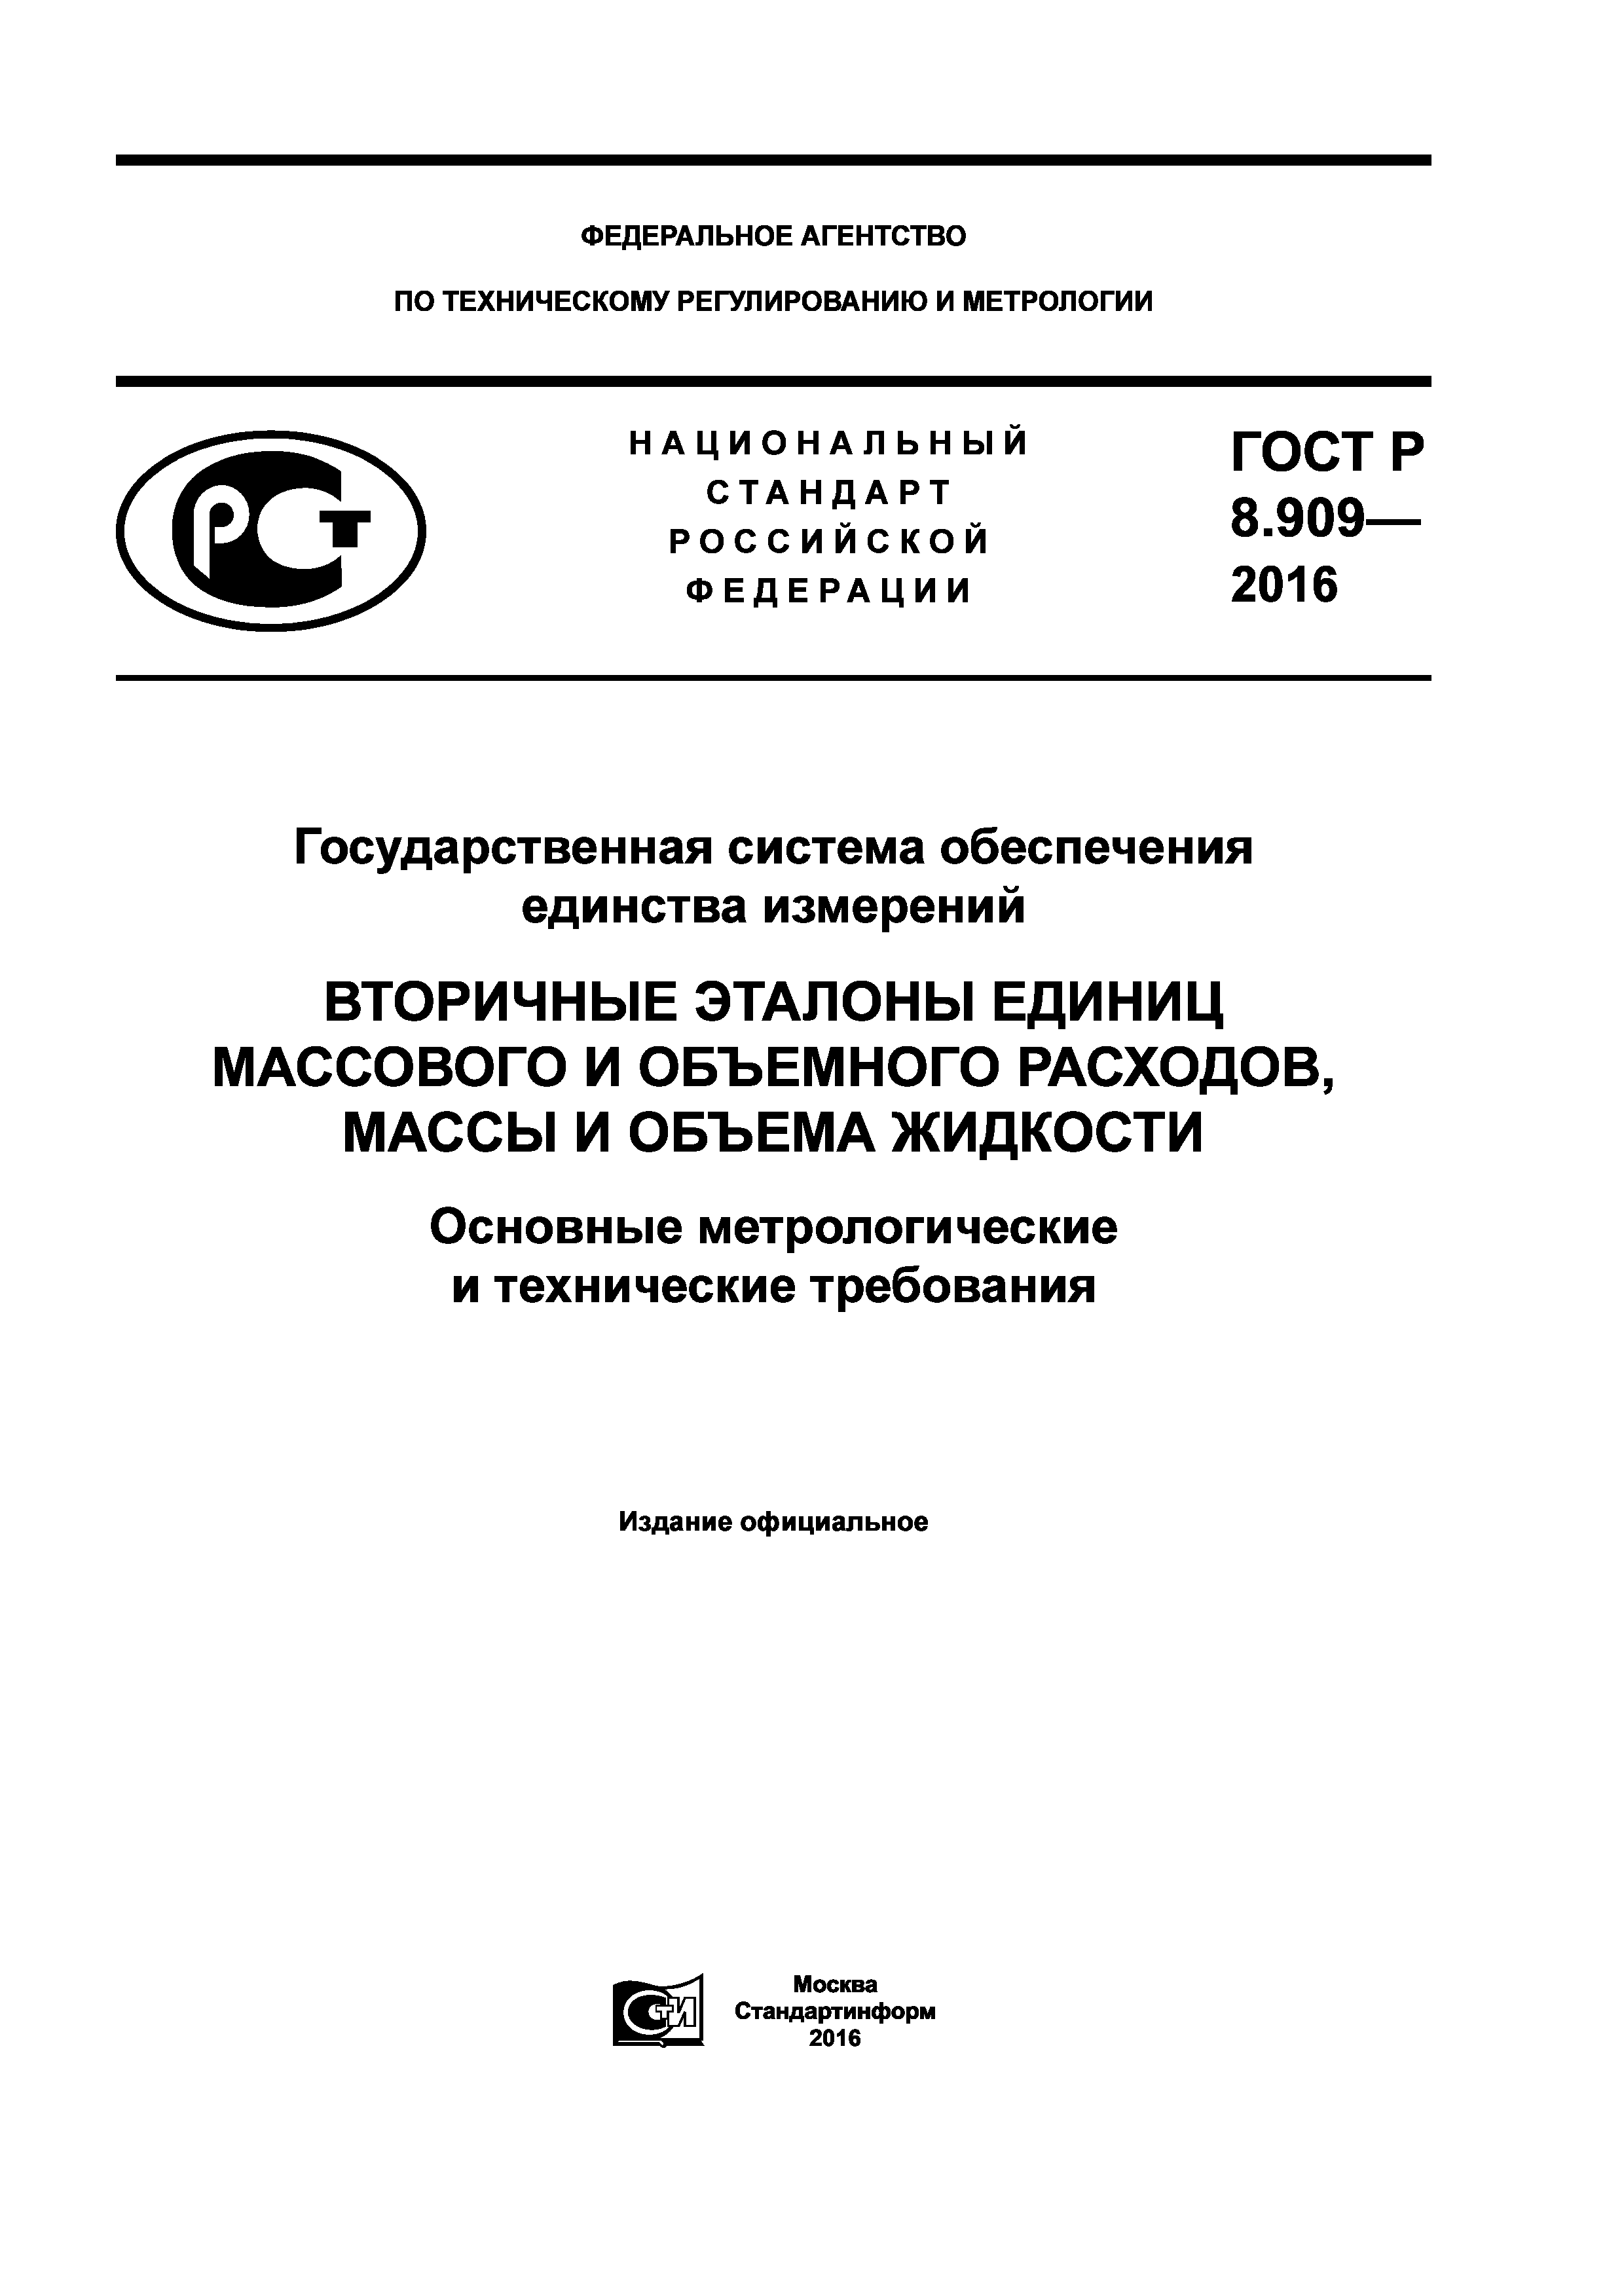 ГОСТ Р 8.909-2016